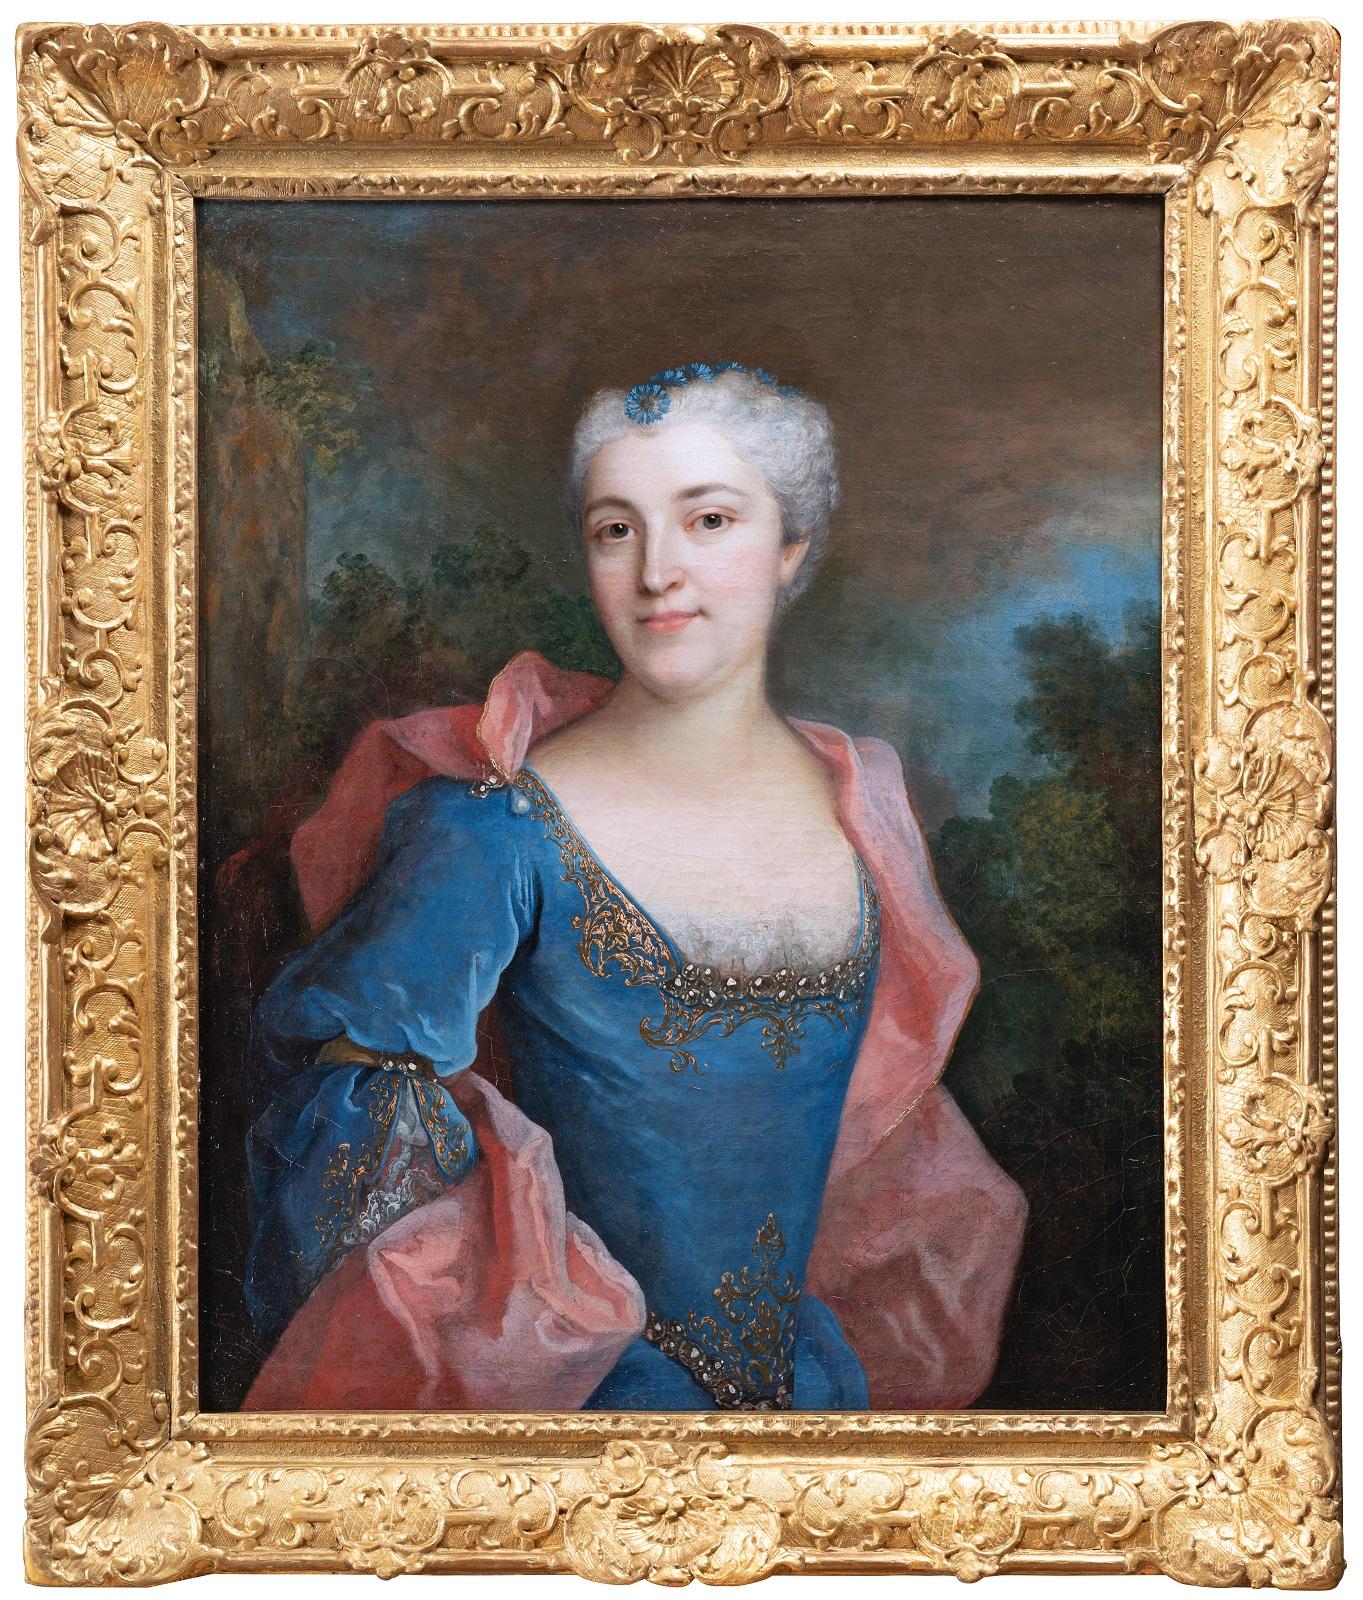 Henri Millot Portrait Painting - 18th c. French Portrait of Louise Dorothea von Hoffman, signed H. Millot, 1724